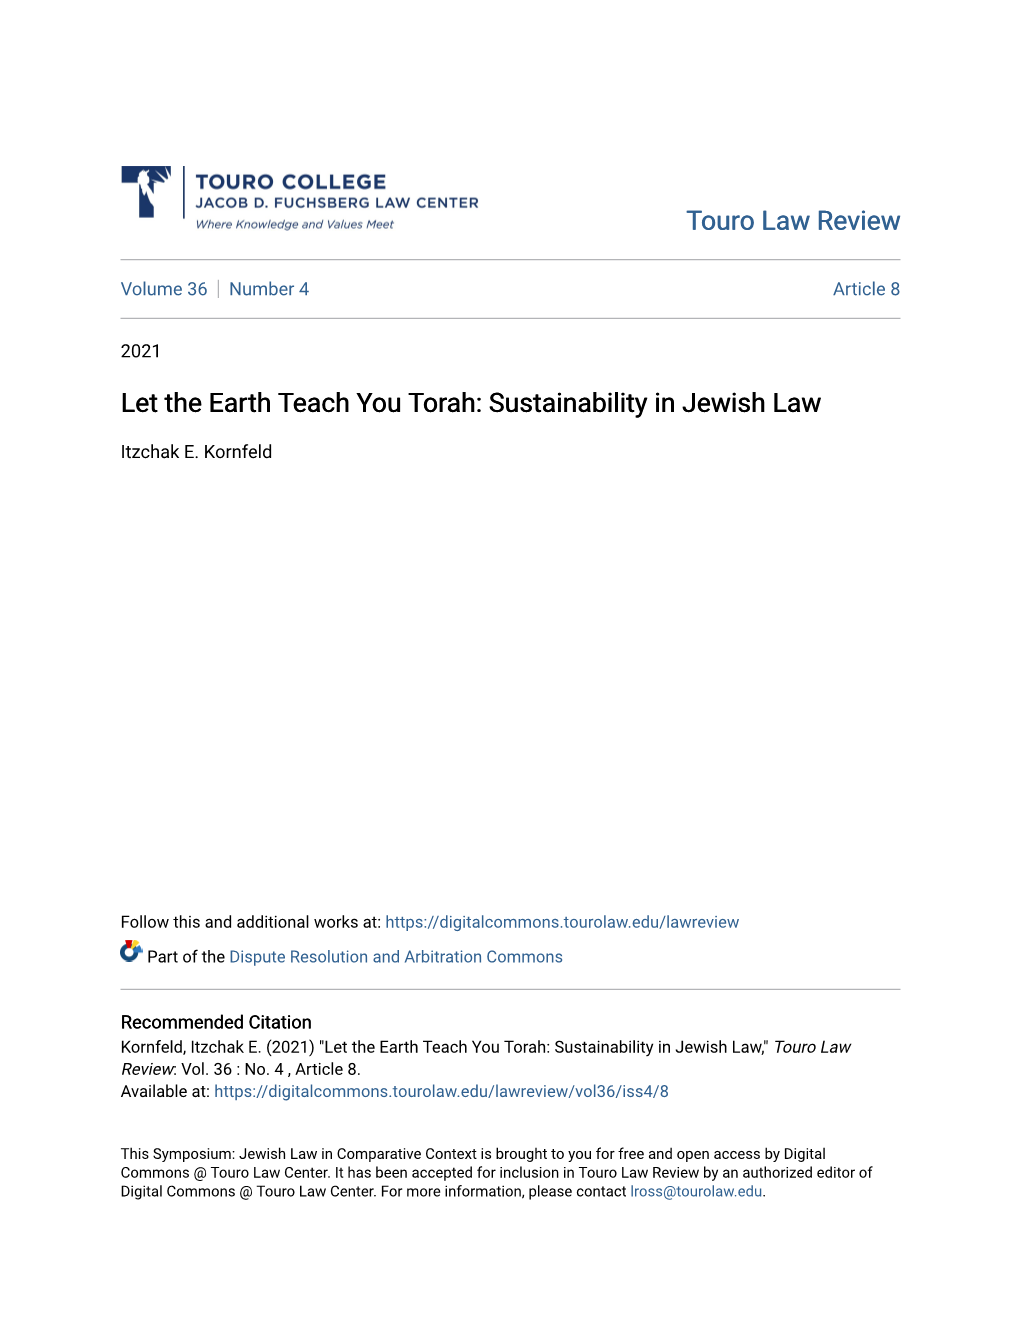 Sustainability in Jewish Law